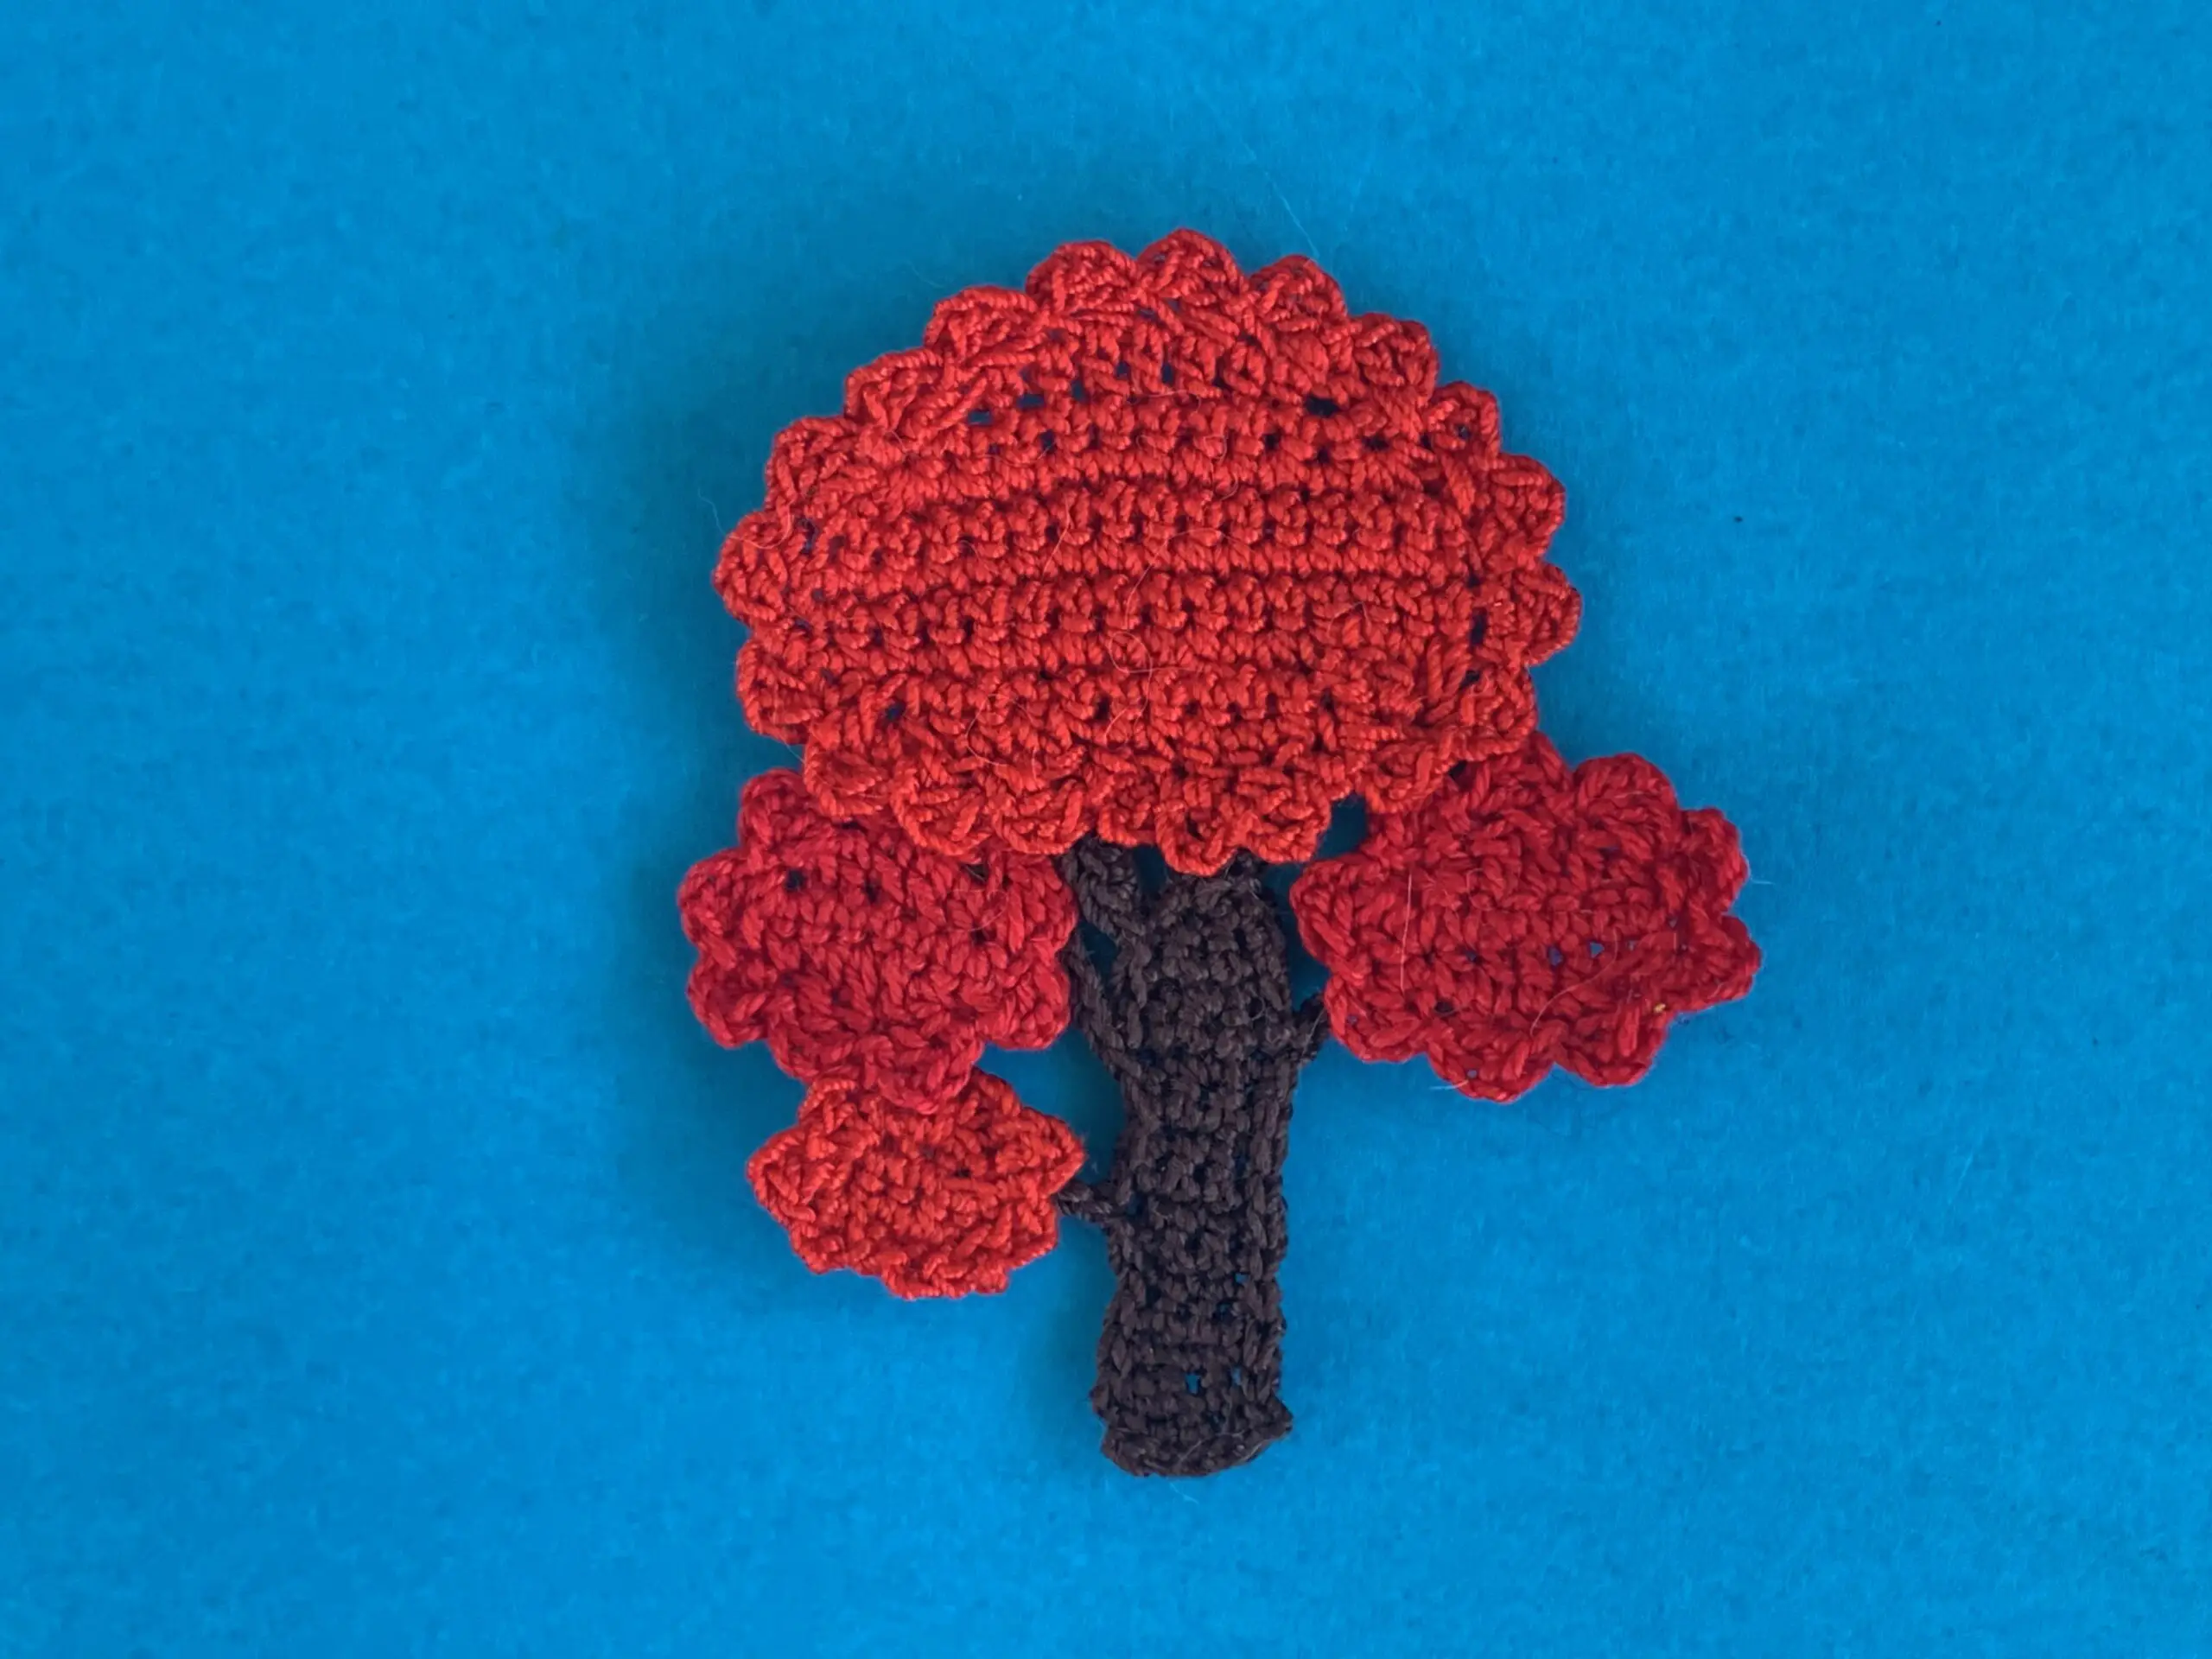 Finished crochet tree 2 ply landscape